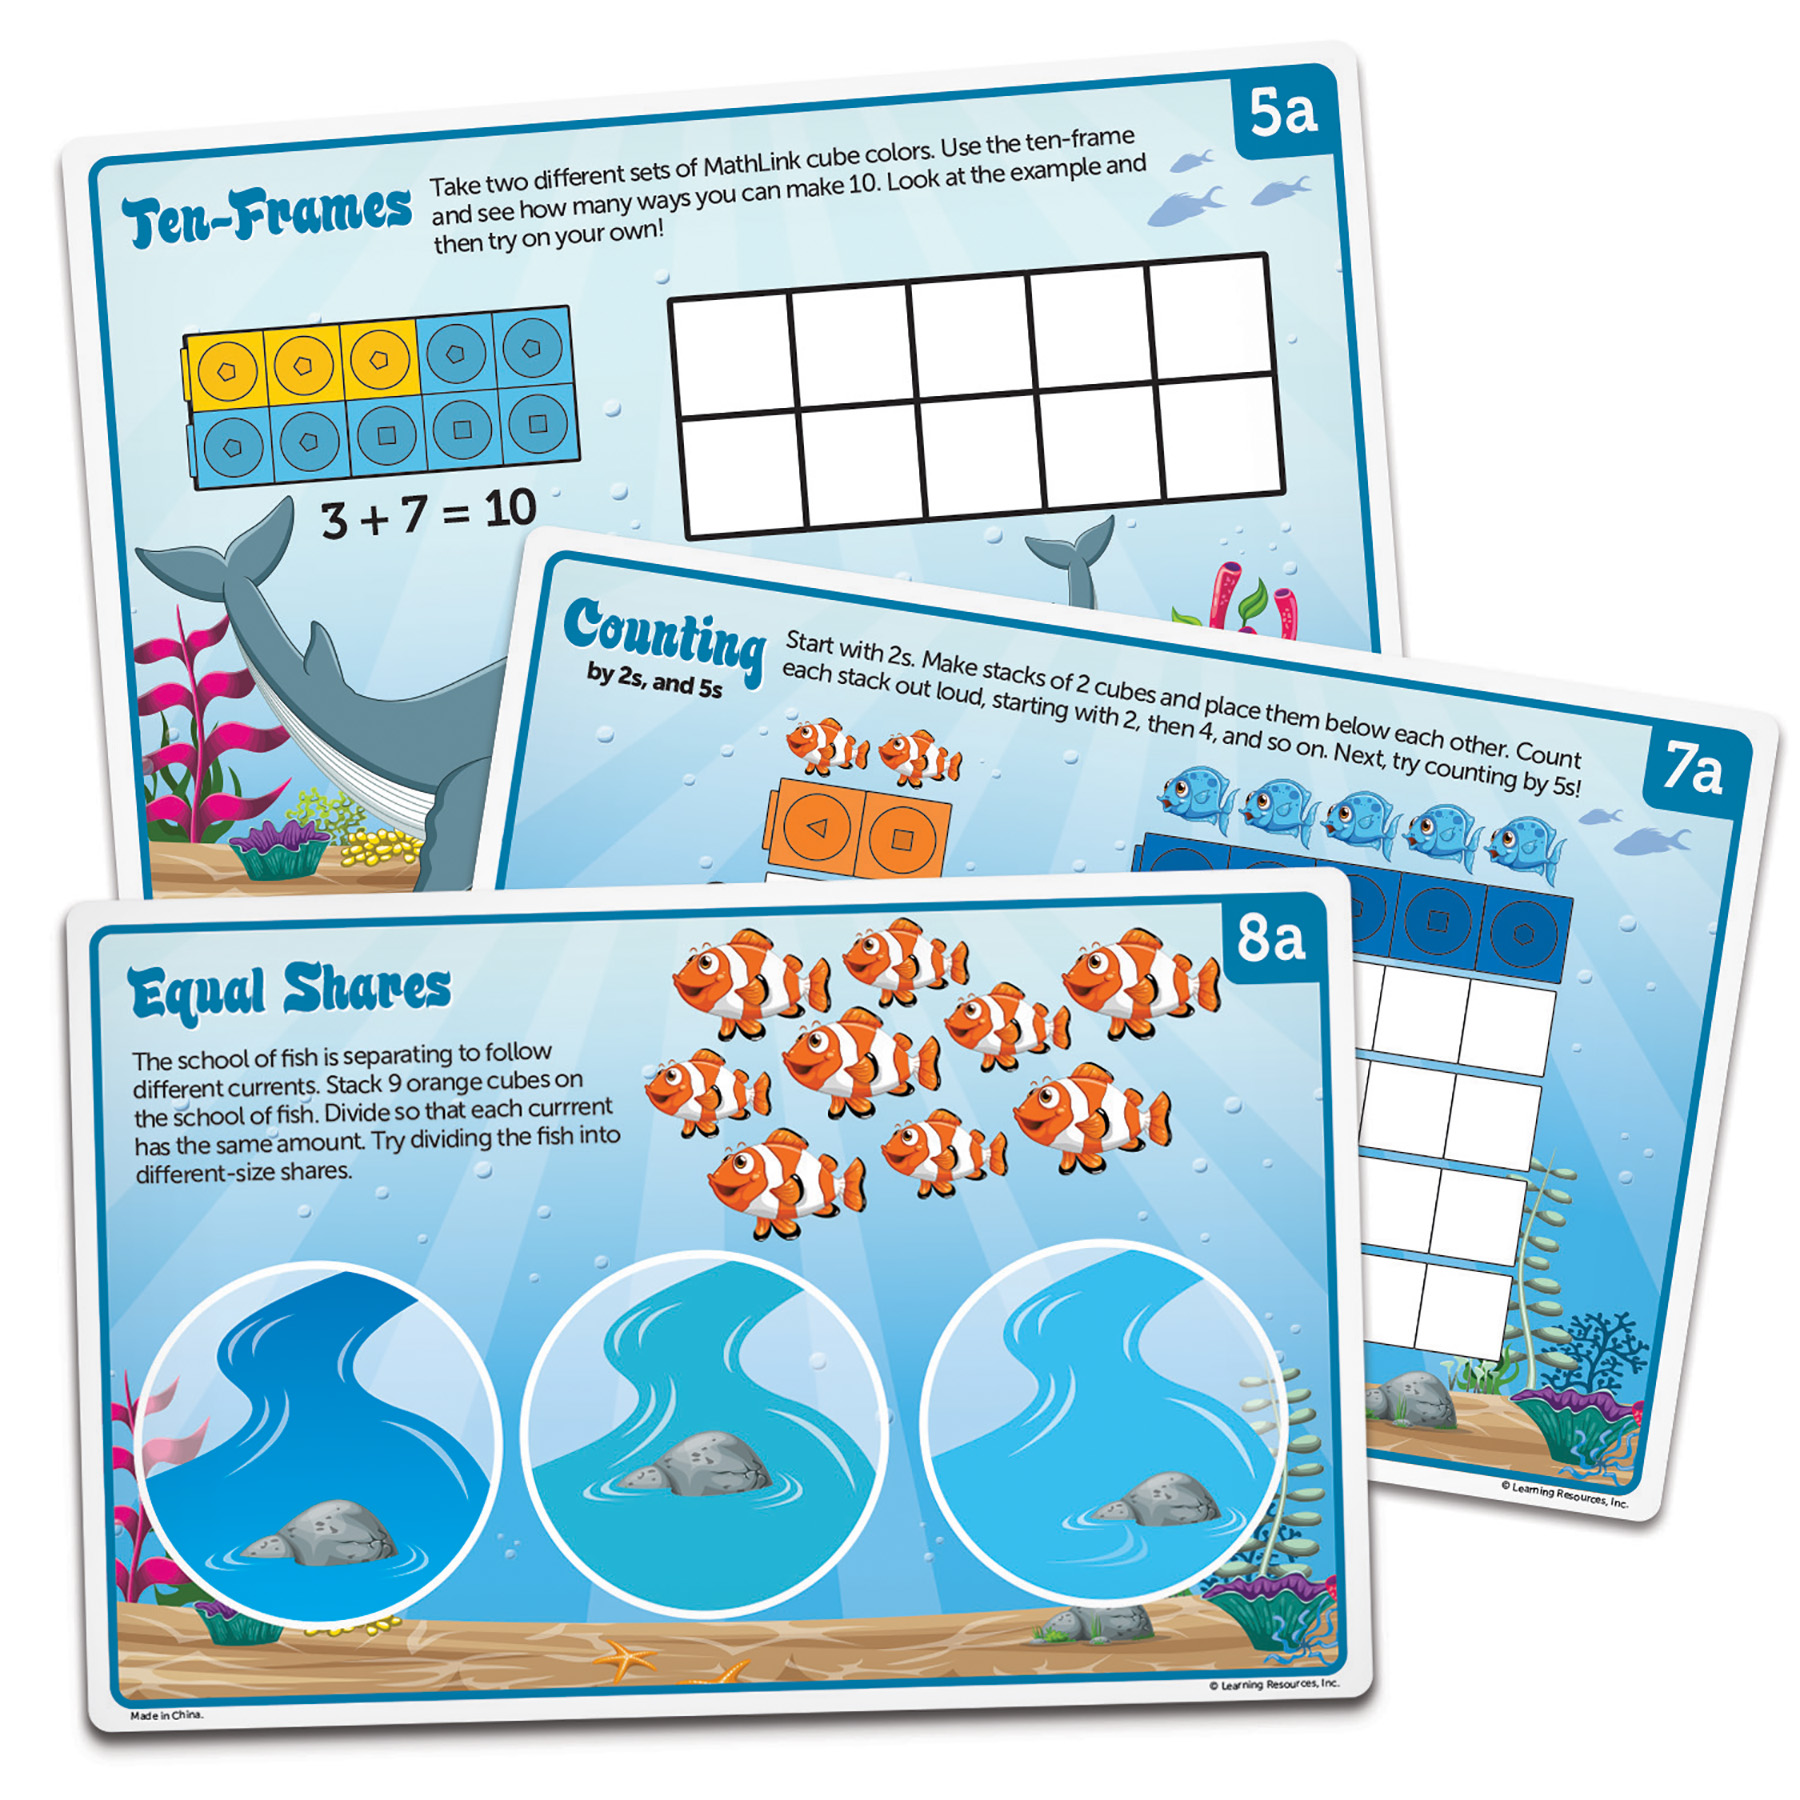 Learning Resources Mathlink Cubes Kindergarten Math Activity Set: Sea Adventures! image number null